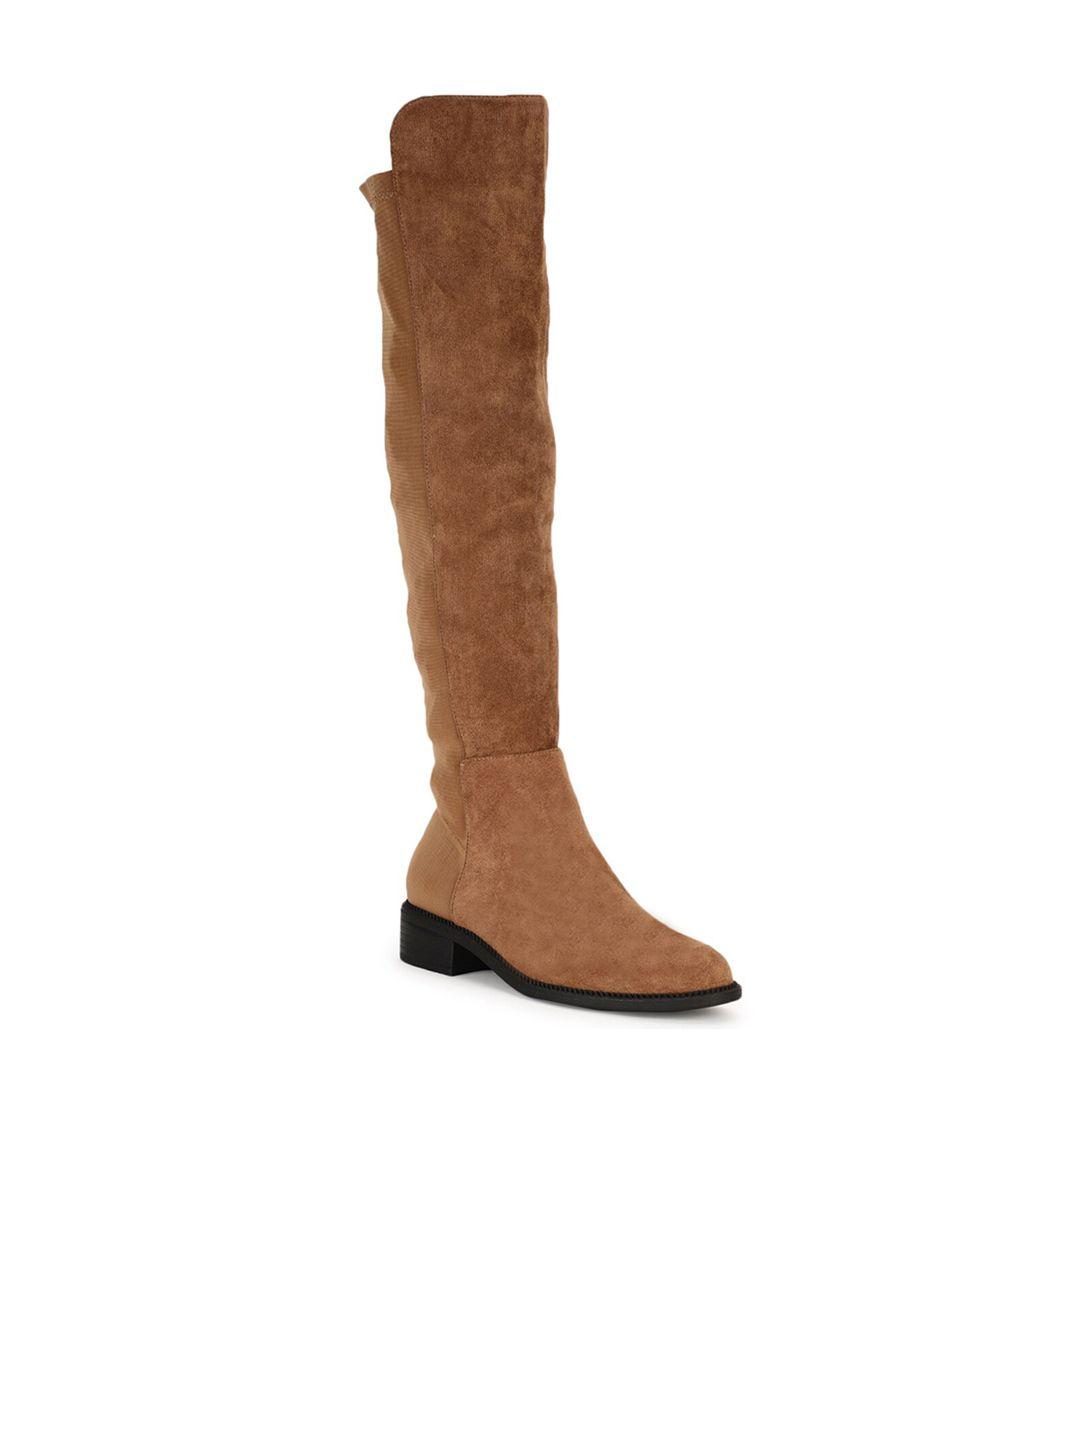 bata-women-tan-brown-leather-long-boots